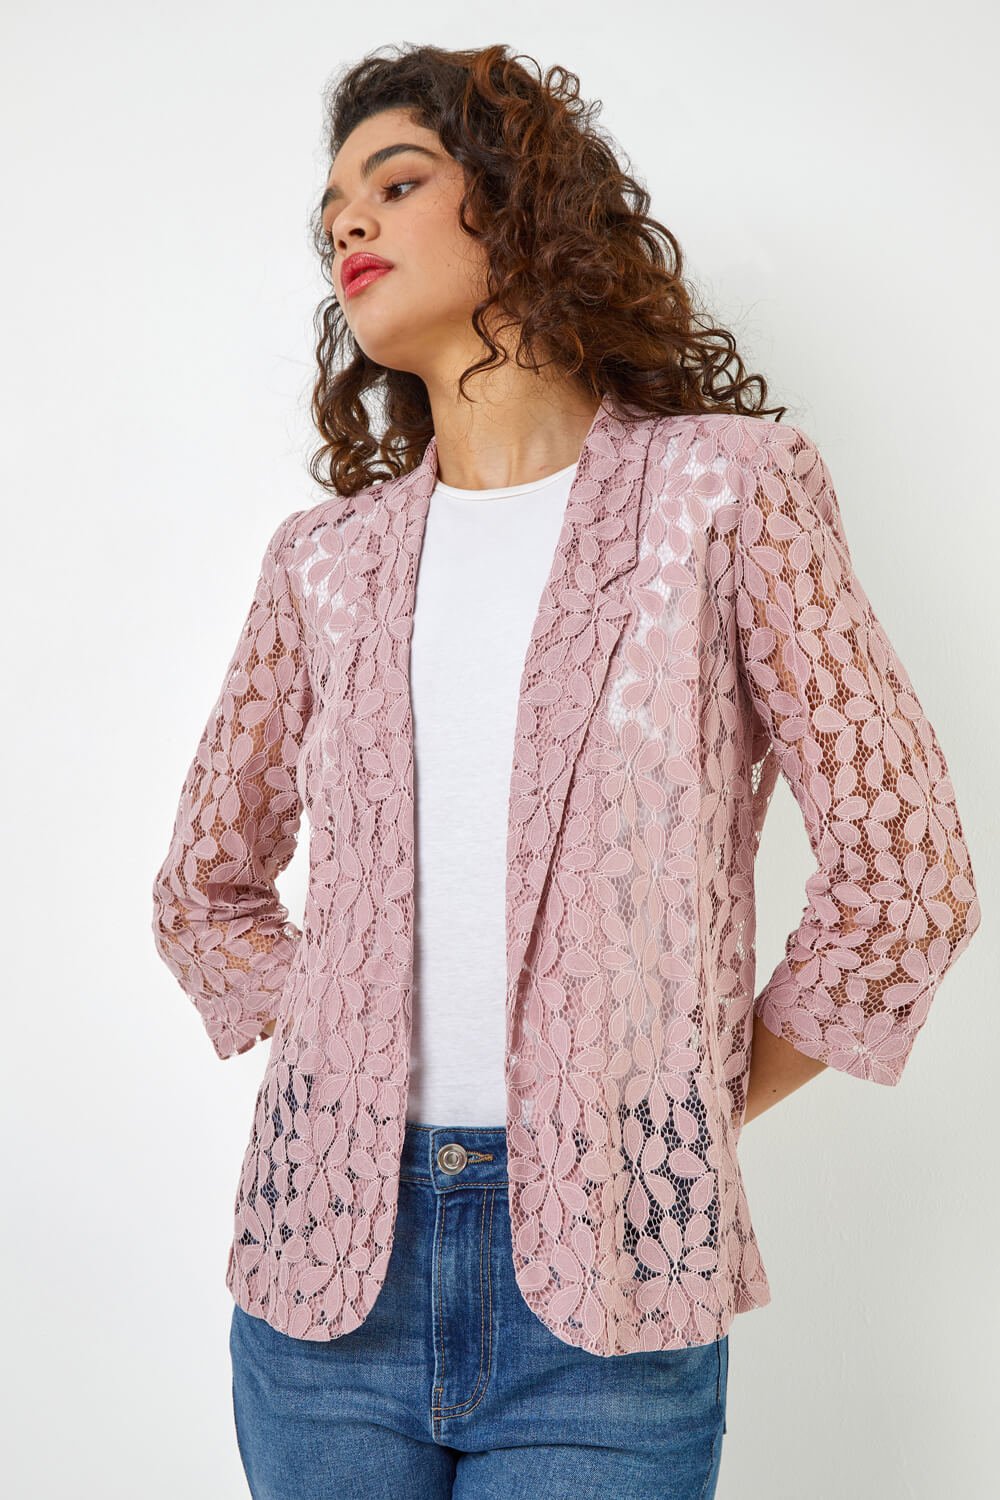 Petal Lace Jacket in Rose Pink - Roman Originals UK